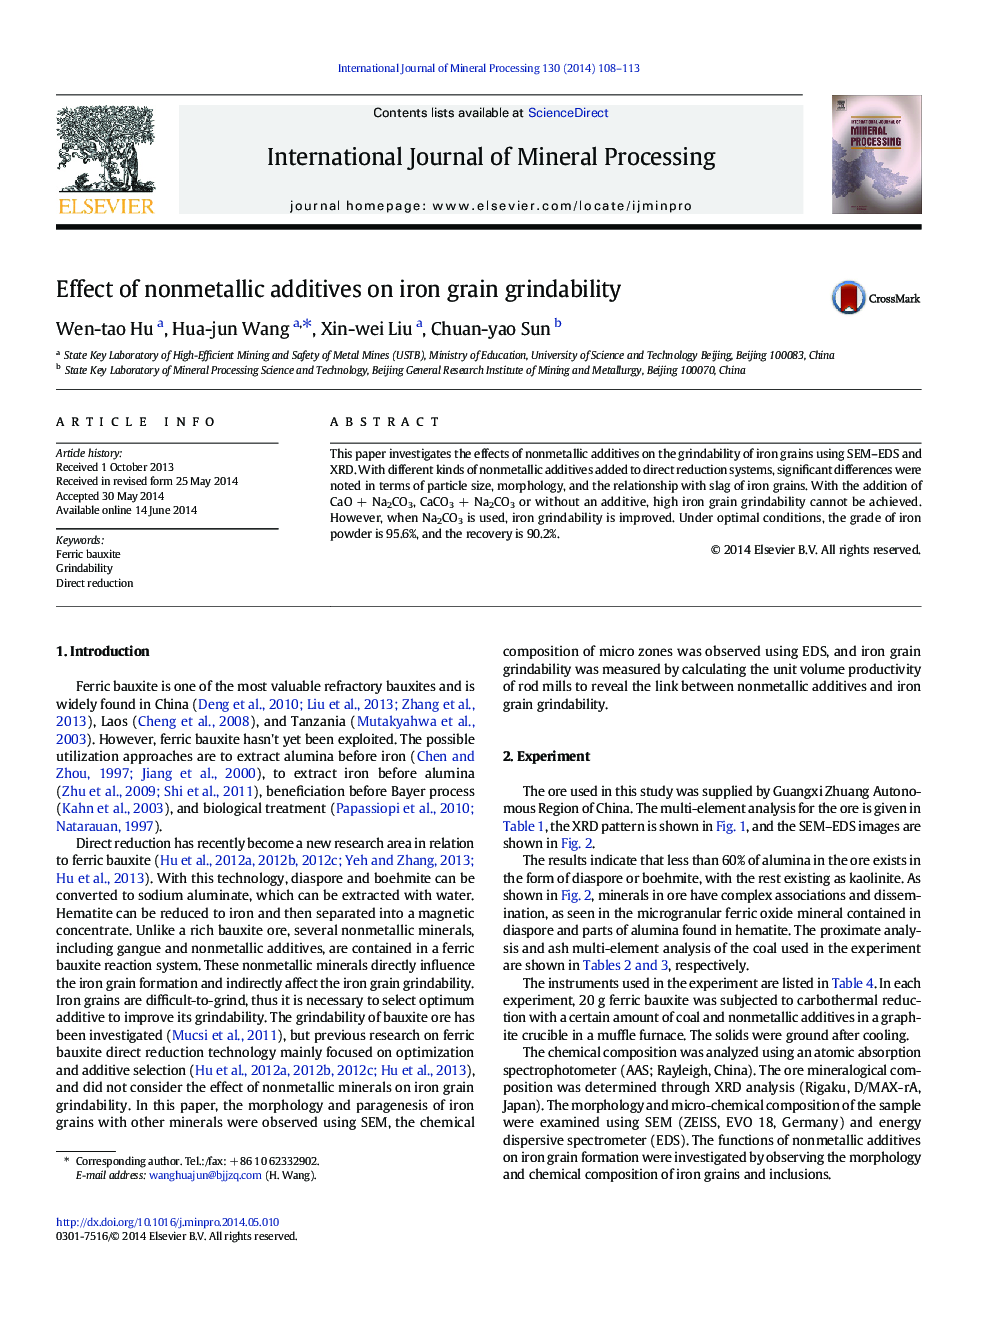 Effect of nonmetallic additives on iron grain grindability